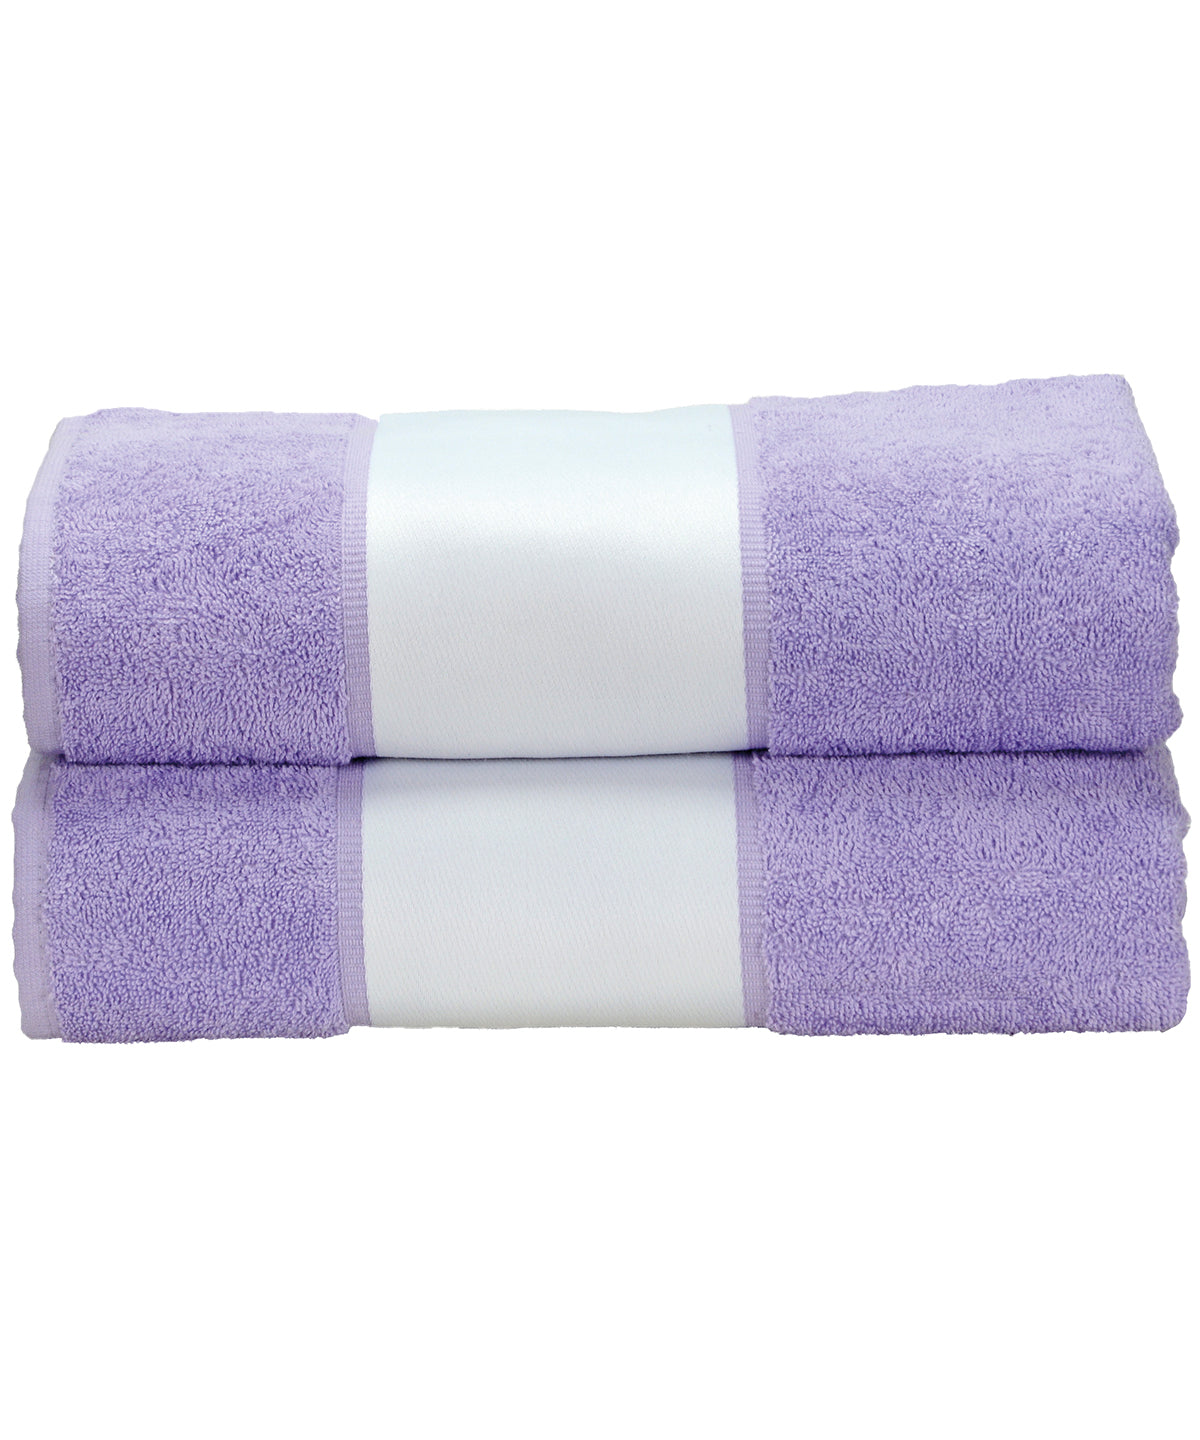 Personalised Towels - Light Purple A&R Towels ARTG® SUBLI-Me® bath towel